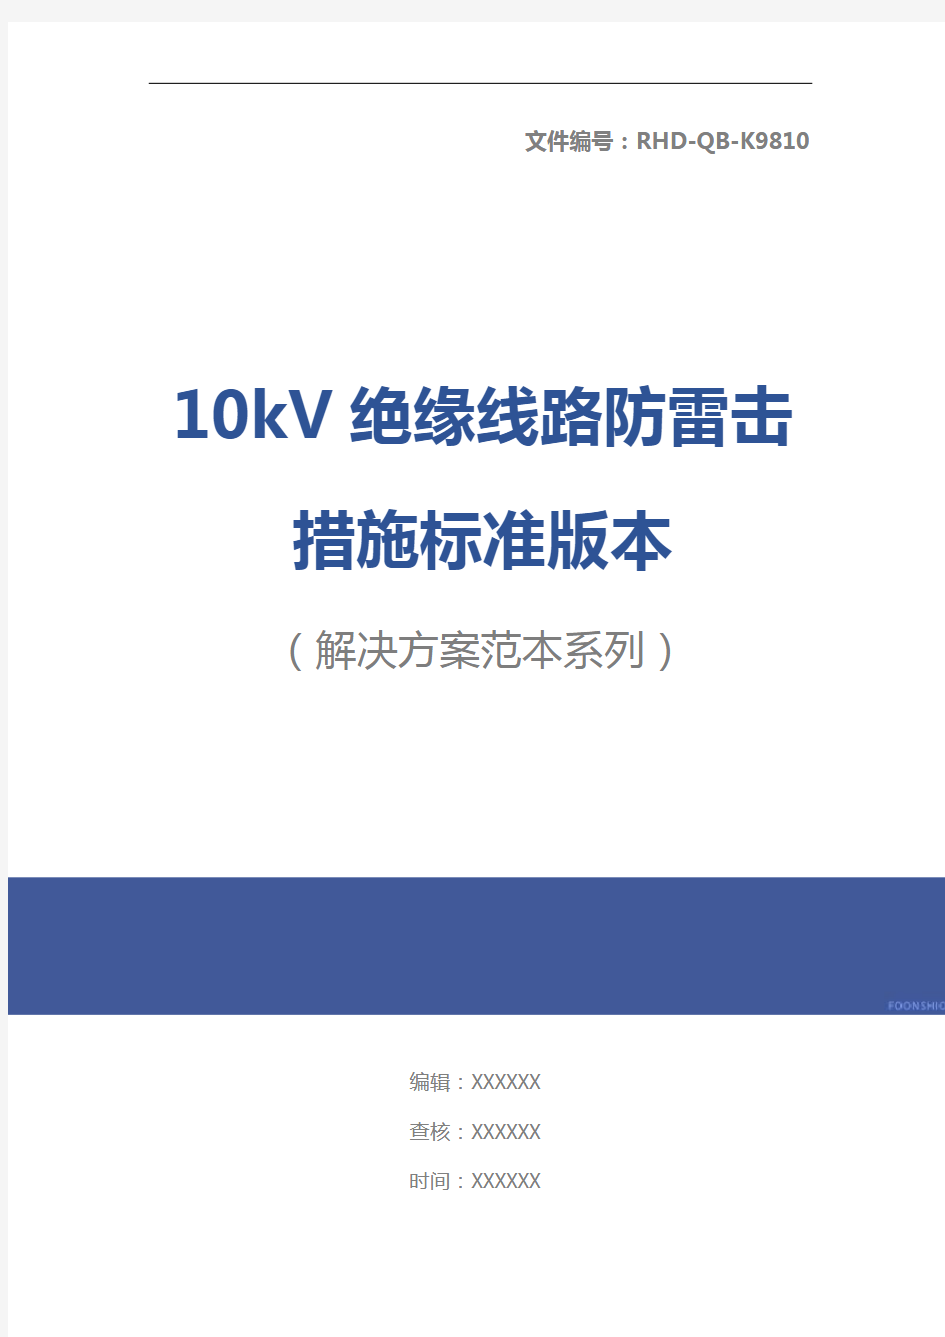 10kV绝缘线路防雷击措施标准版本